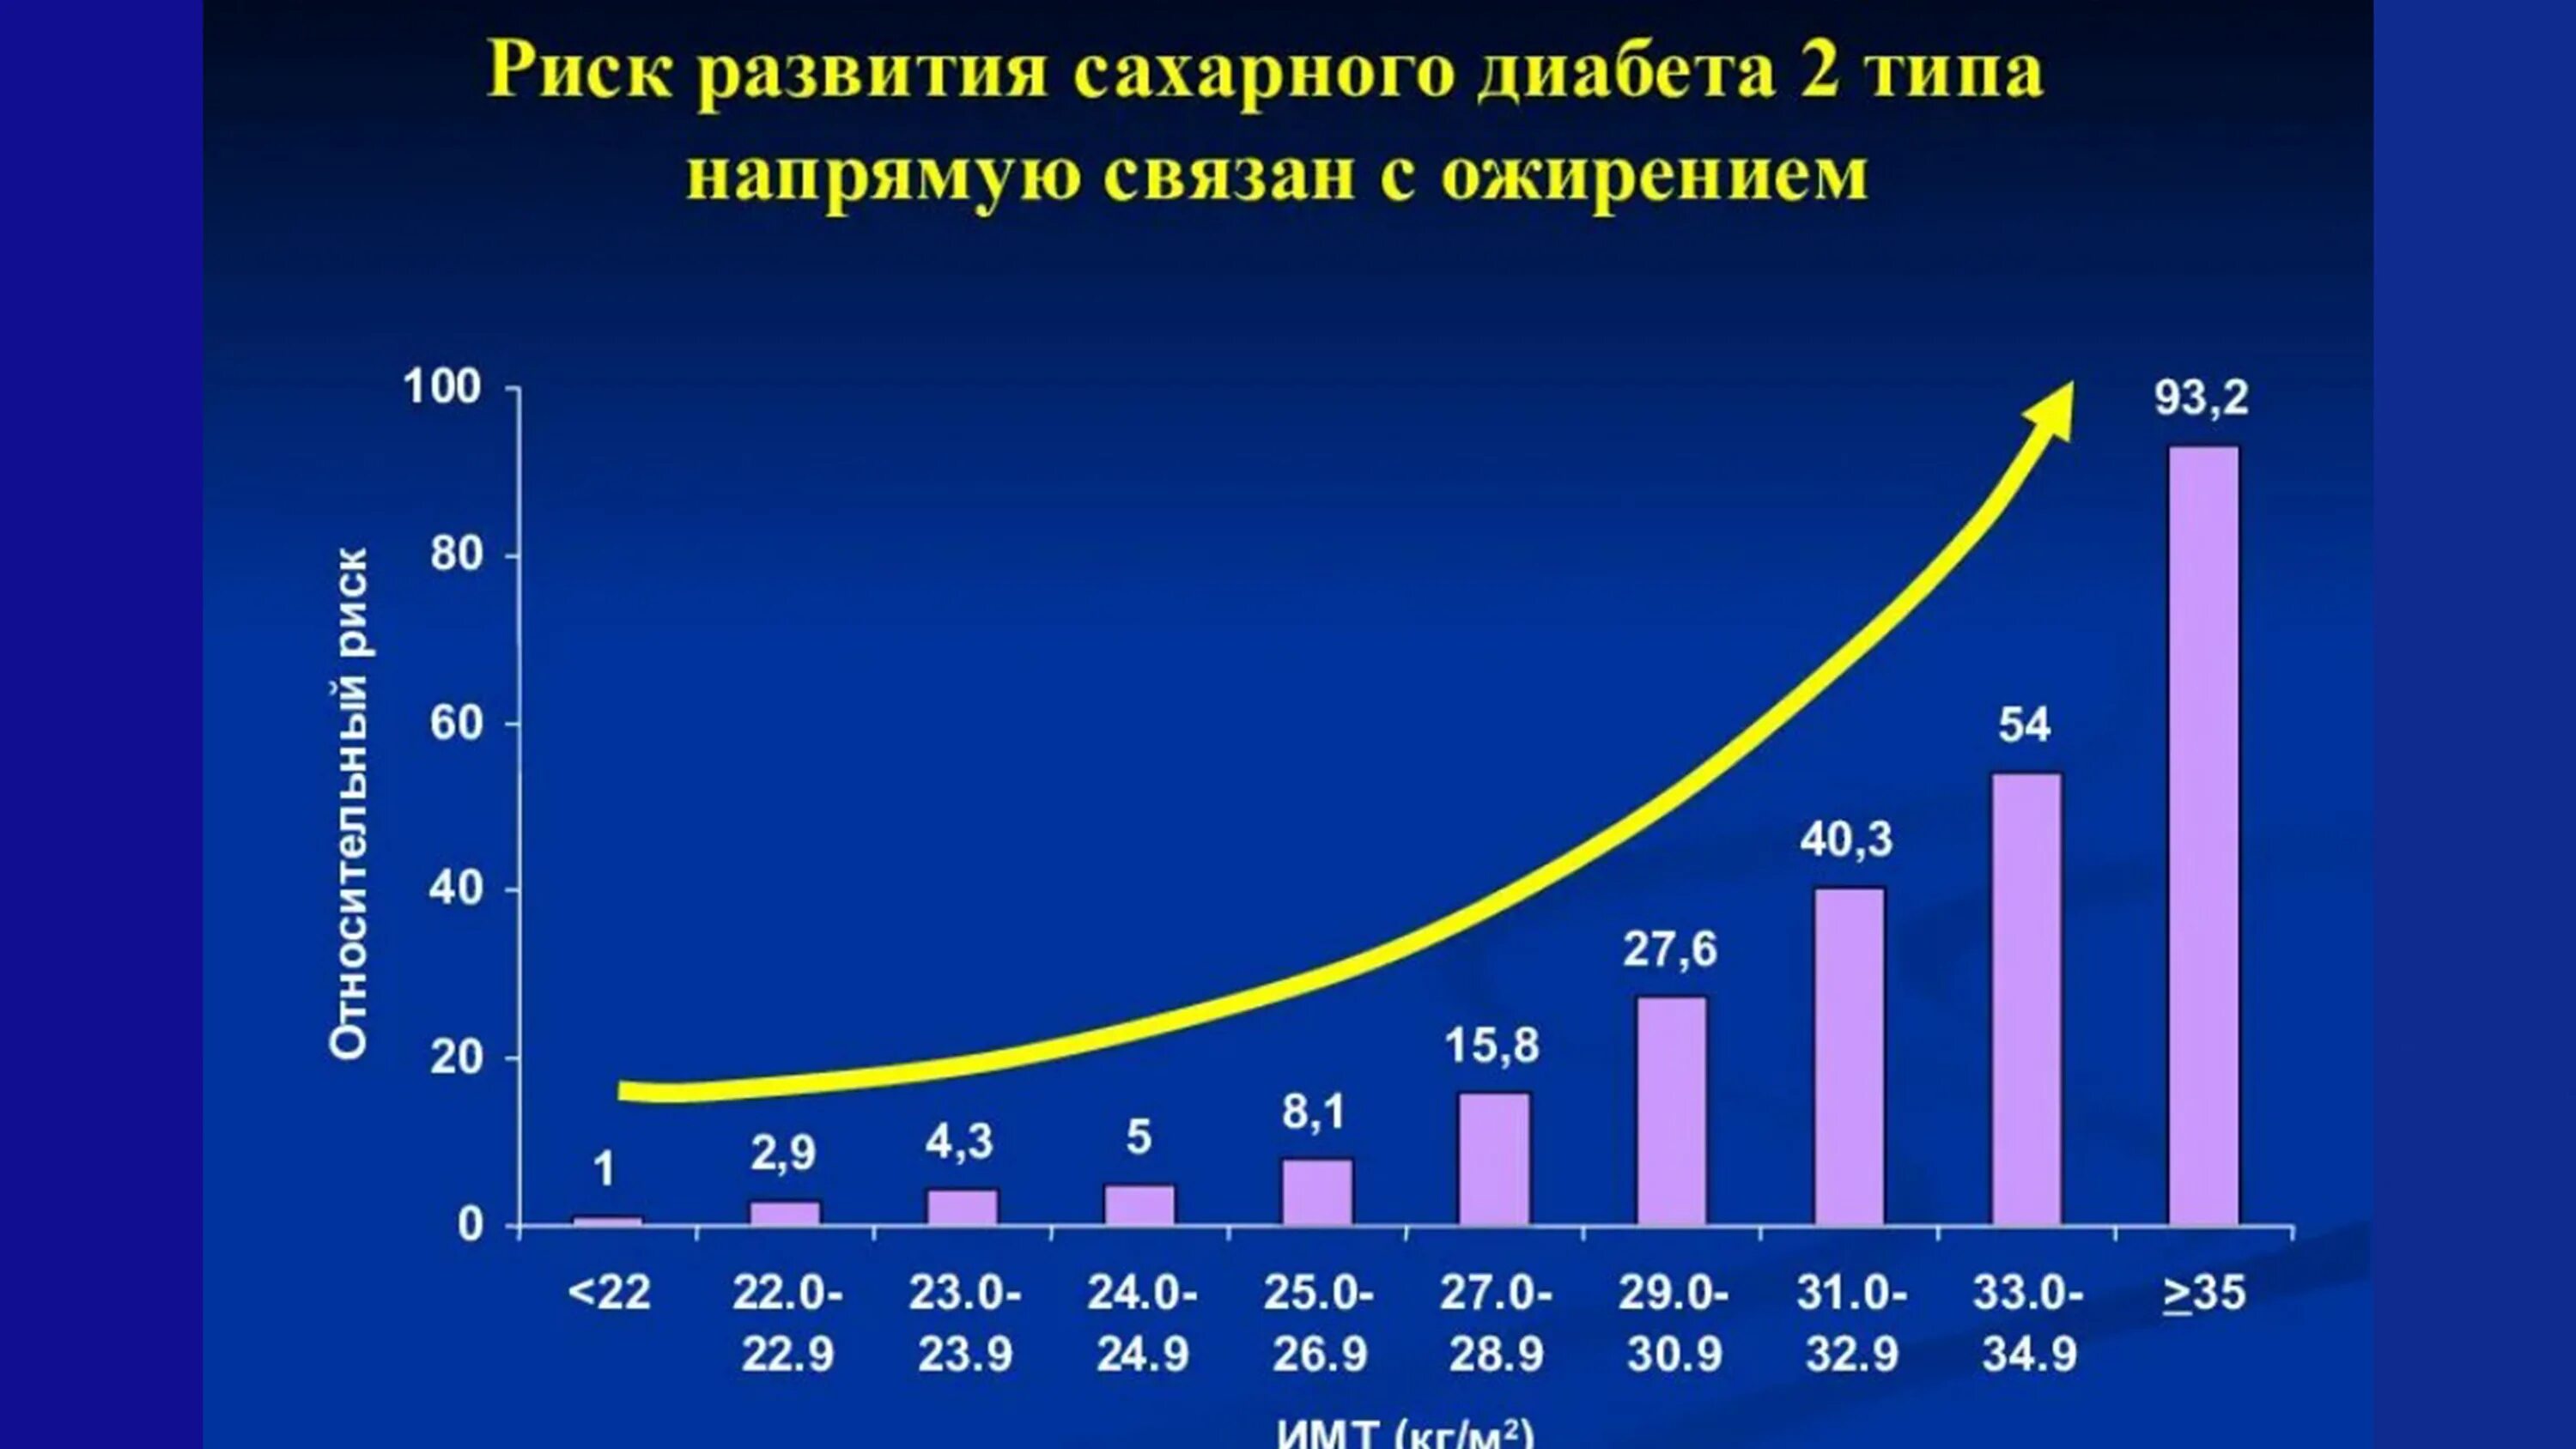 Статистика сахарного диабета в россии. Распространенность сахарного диабета 2 типа в России статистика. Риск развития сахарного диабета 2 типа. Распространенность сахарного диабета в России диаграмма. Статистика заболеваемости диабетом 2 типа в России.